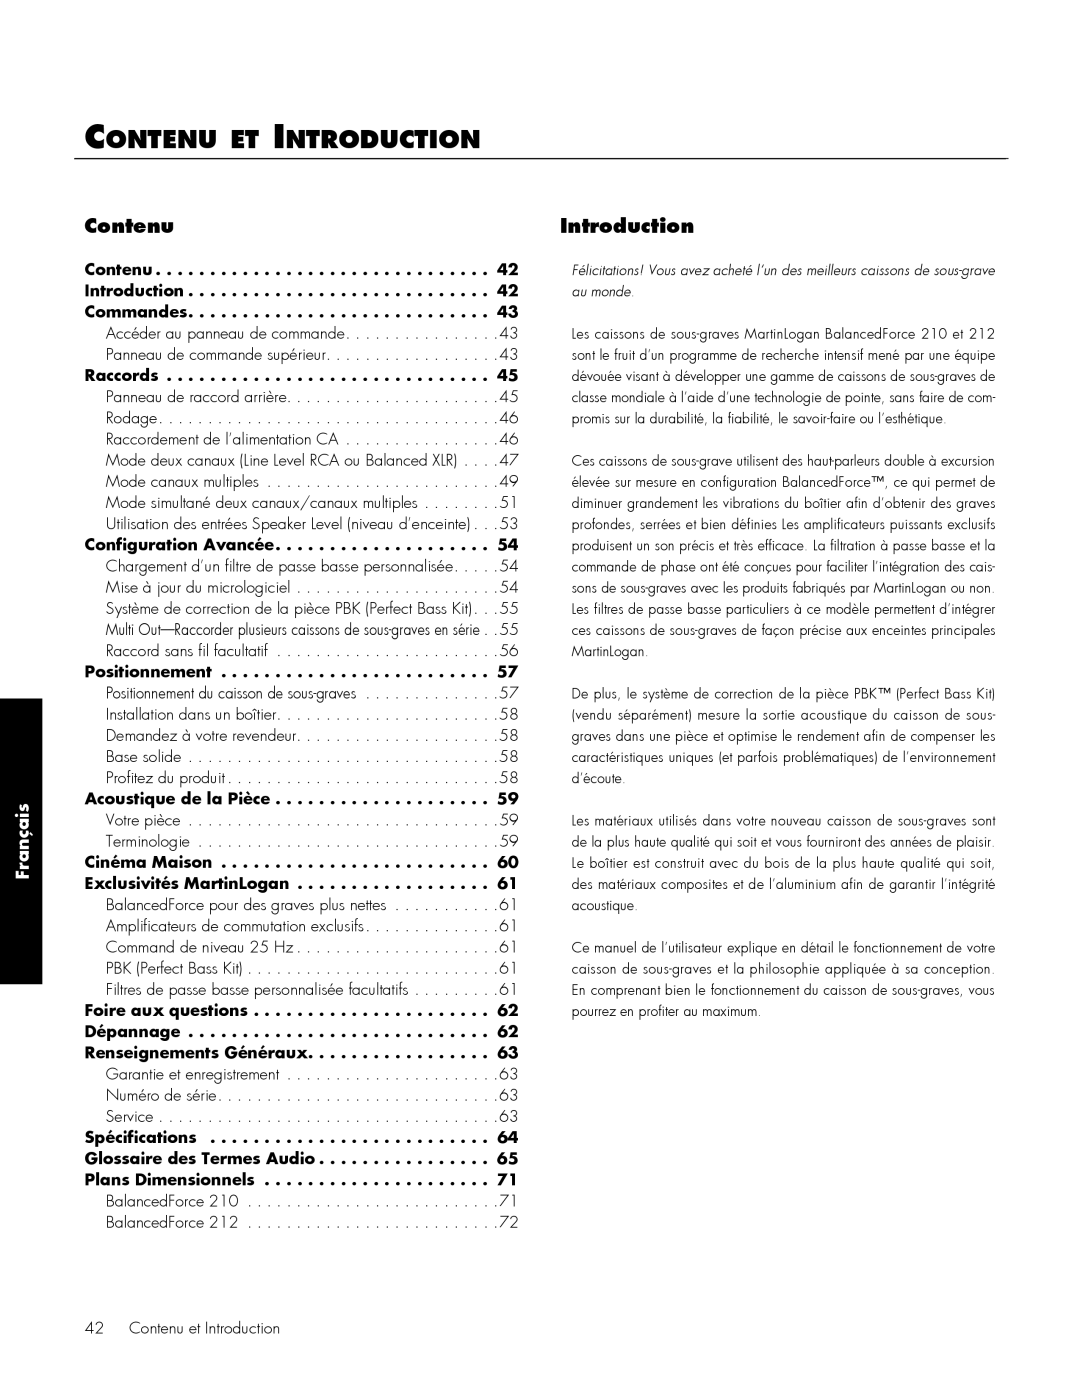 MartinLogan 210, 212 user manual Contenu et Introduction, Français 